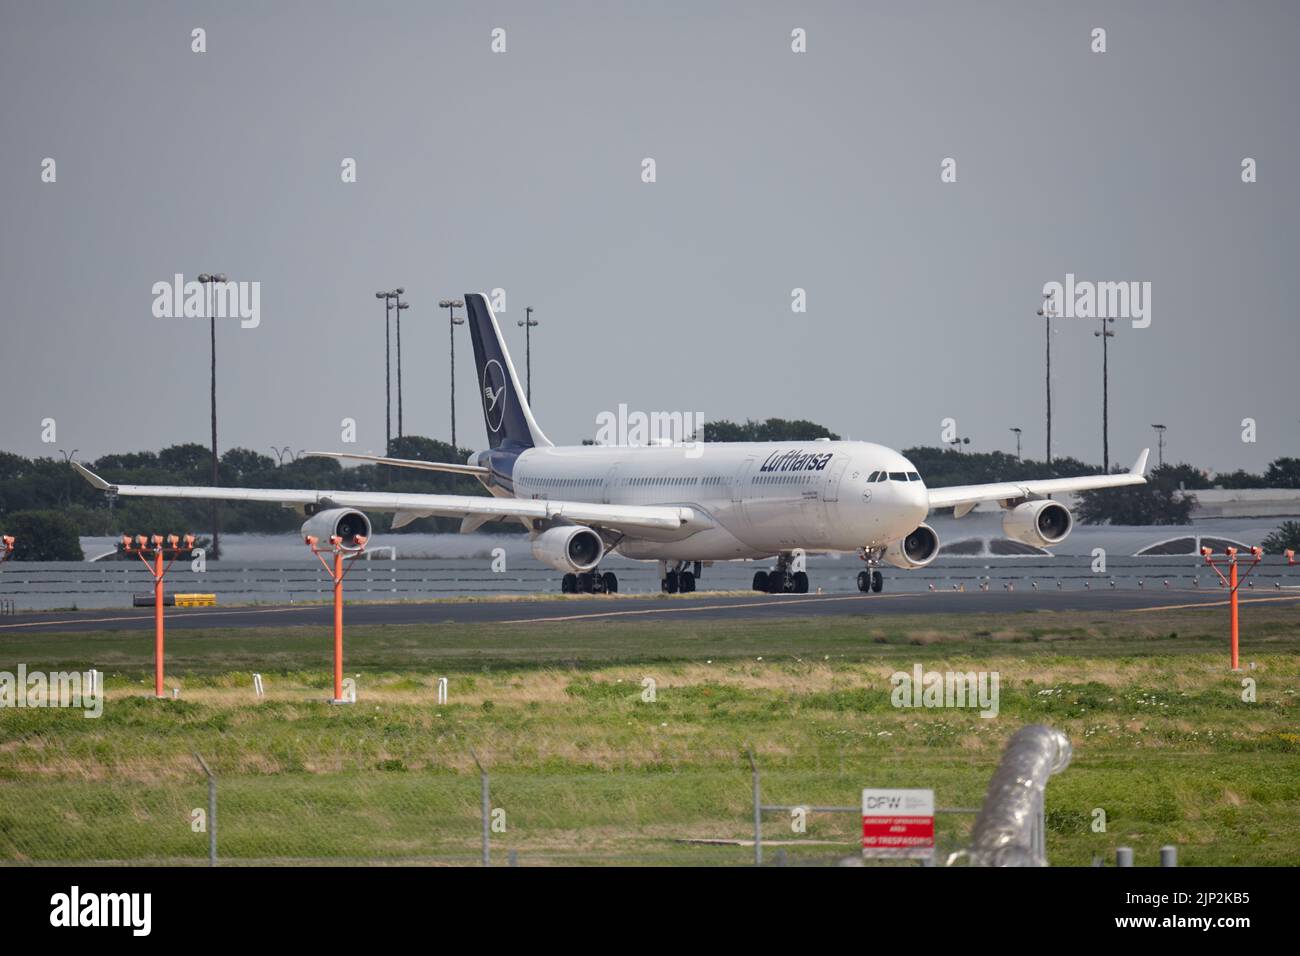 The Lufthansa aircraft at DFW International Airport Stock Photo